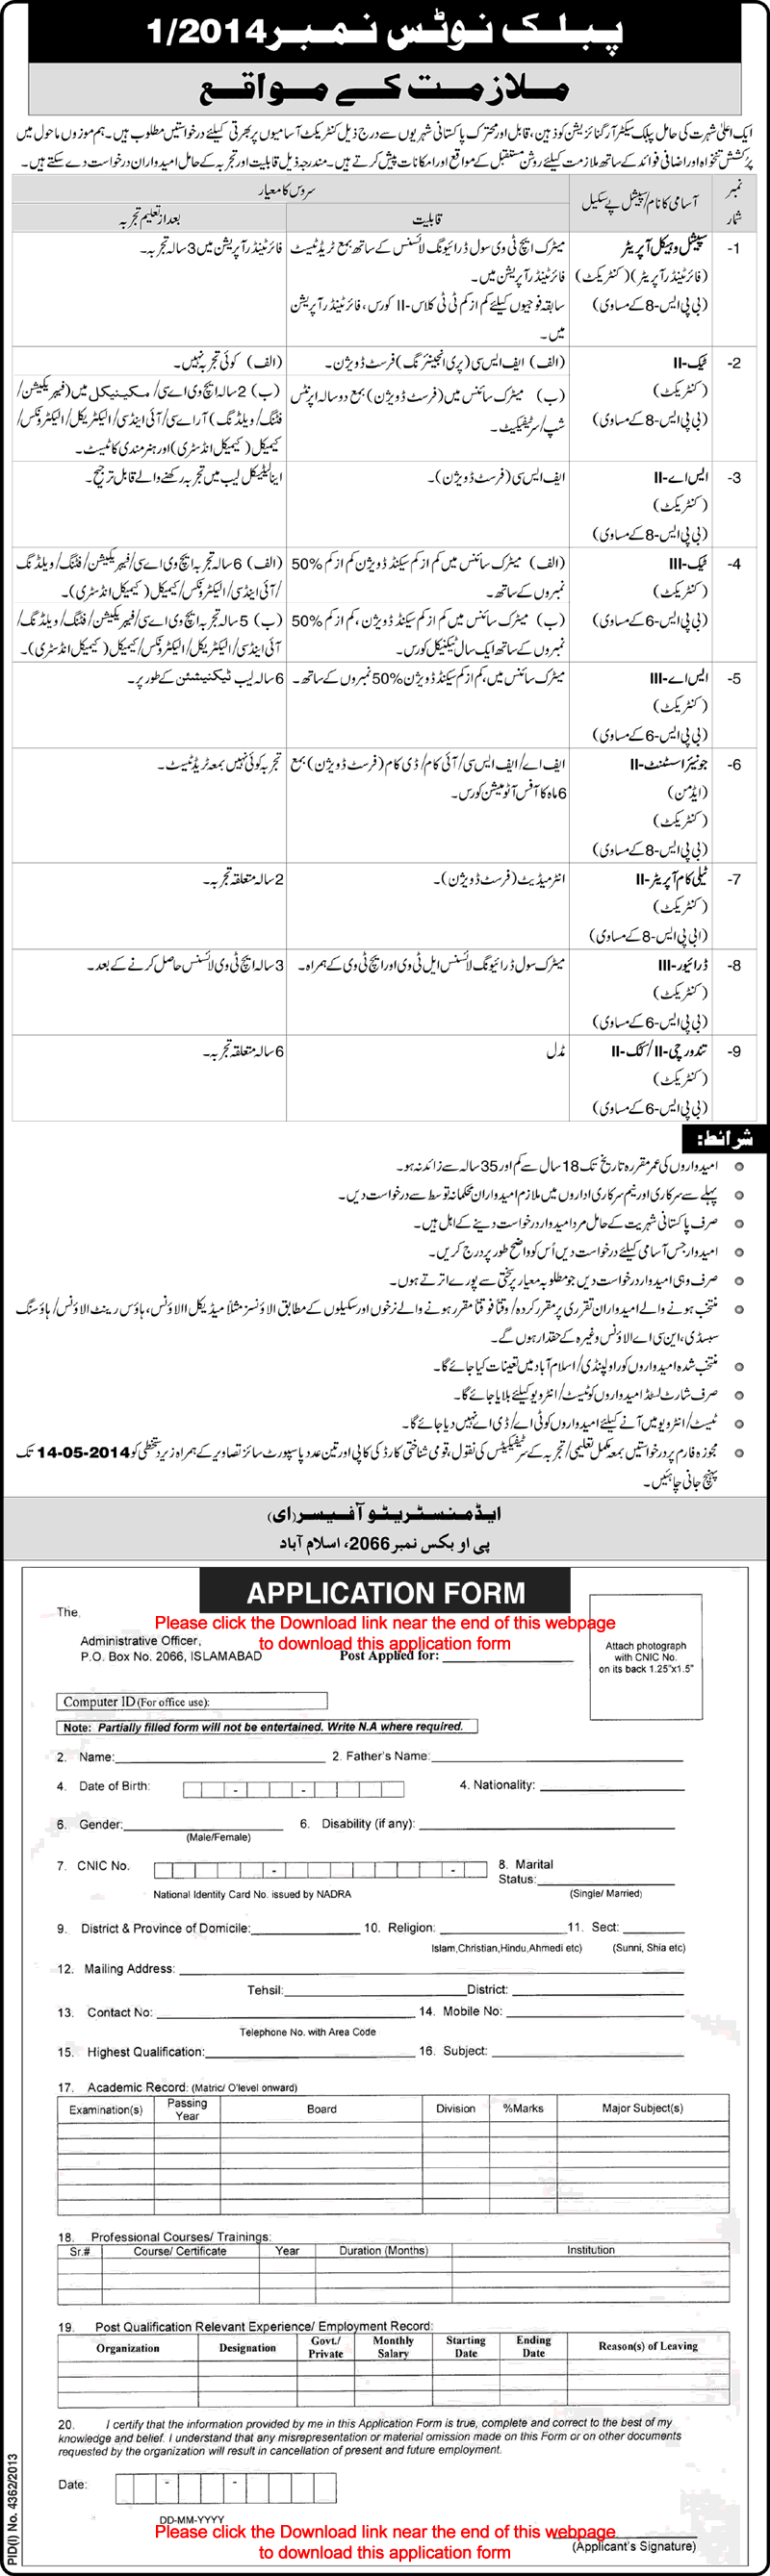 PO Box 2066 Islamabad Jobs 2014 April Application Form Download